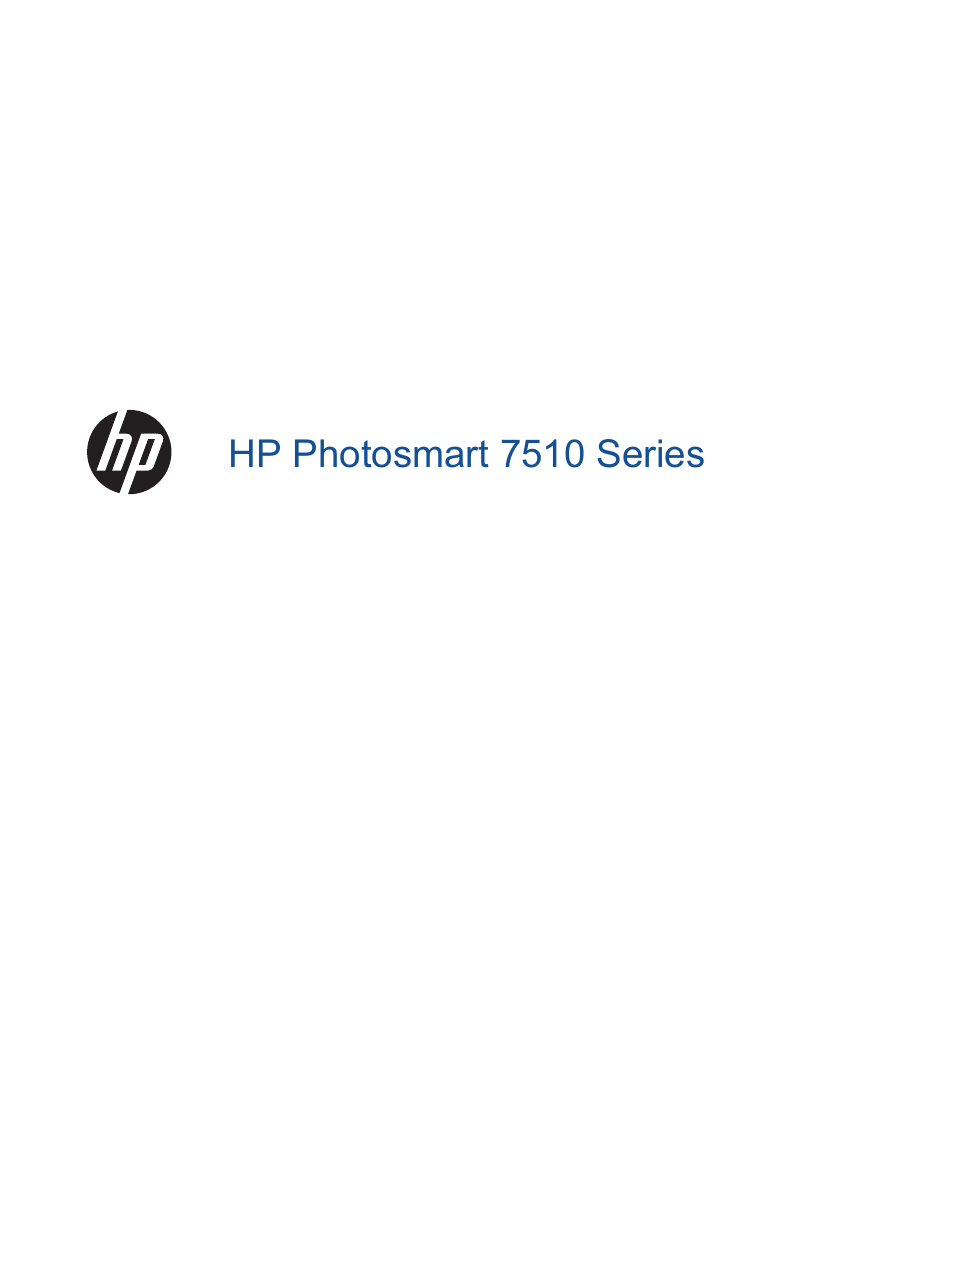 hp photosmart 7515 not printing